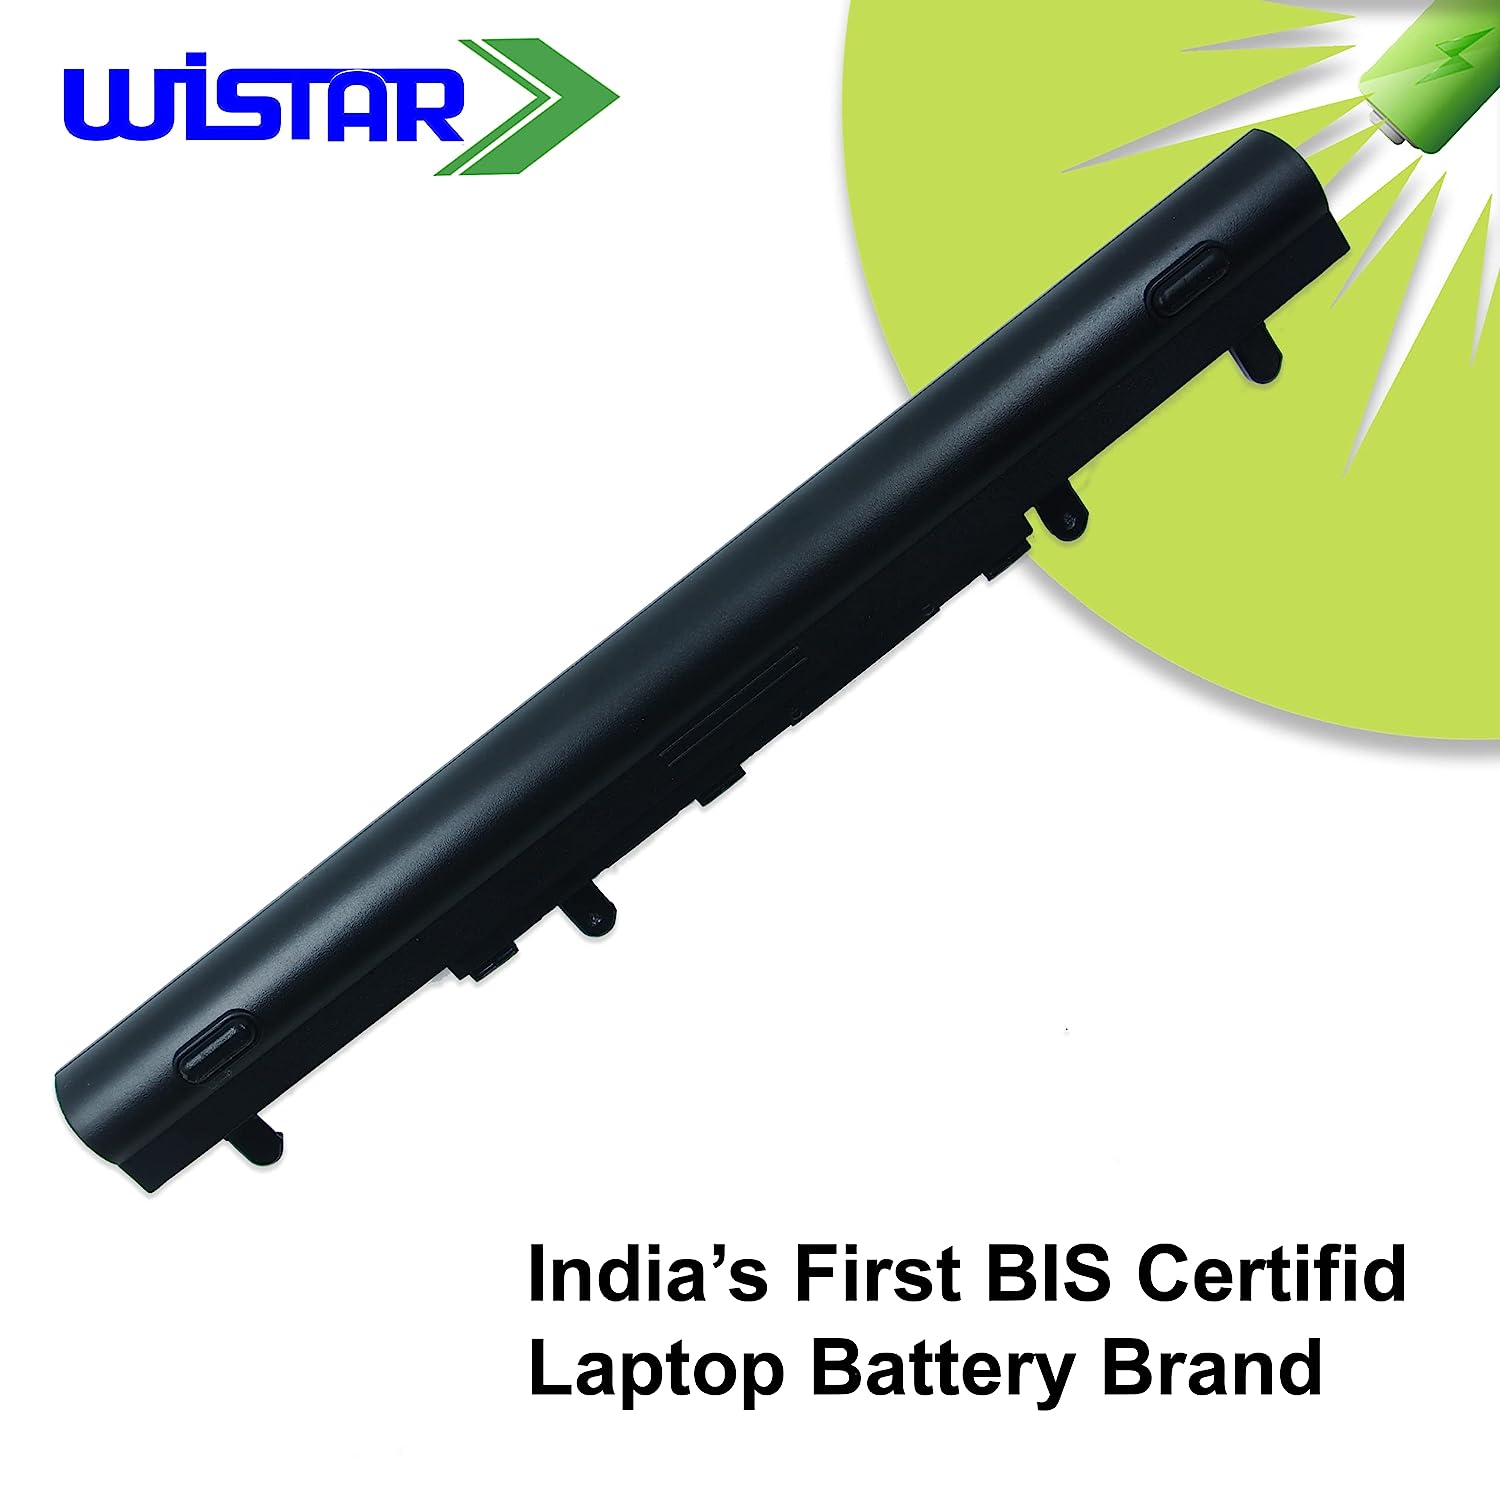 WISTAR Laptop Battery Compatible for AL12A32 AL12A72 Acer Aspire V5 V5-431 V5-551 V5-571 V5-471G V5-571 V5-431,Aspire E1 E1-572 E1-510P E1-522 E1-532 E1-470